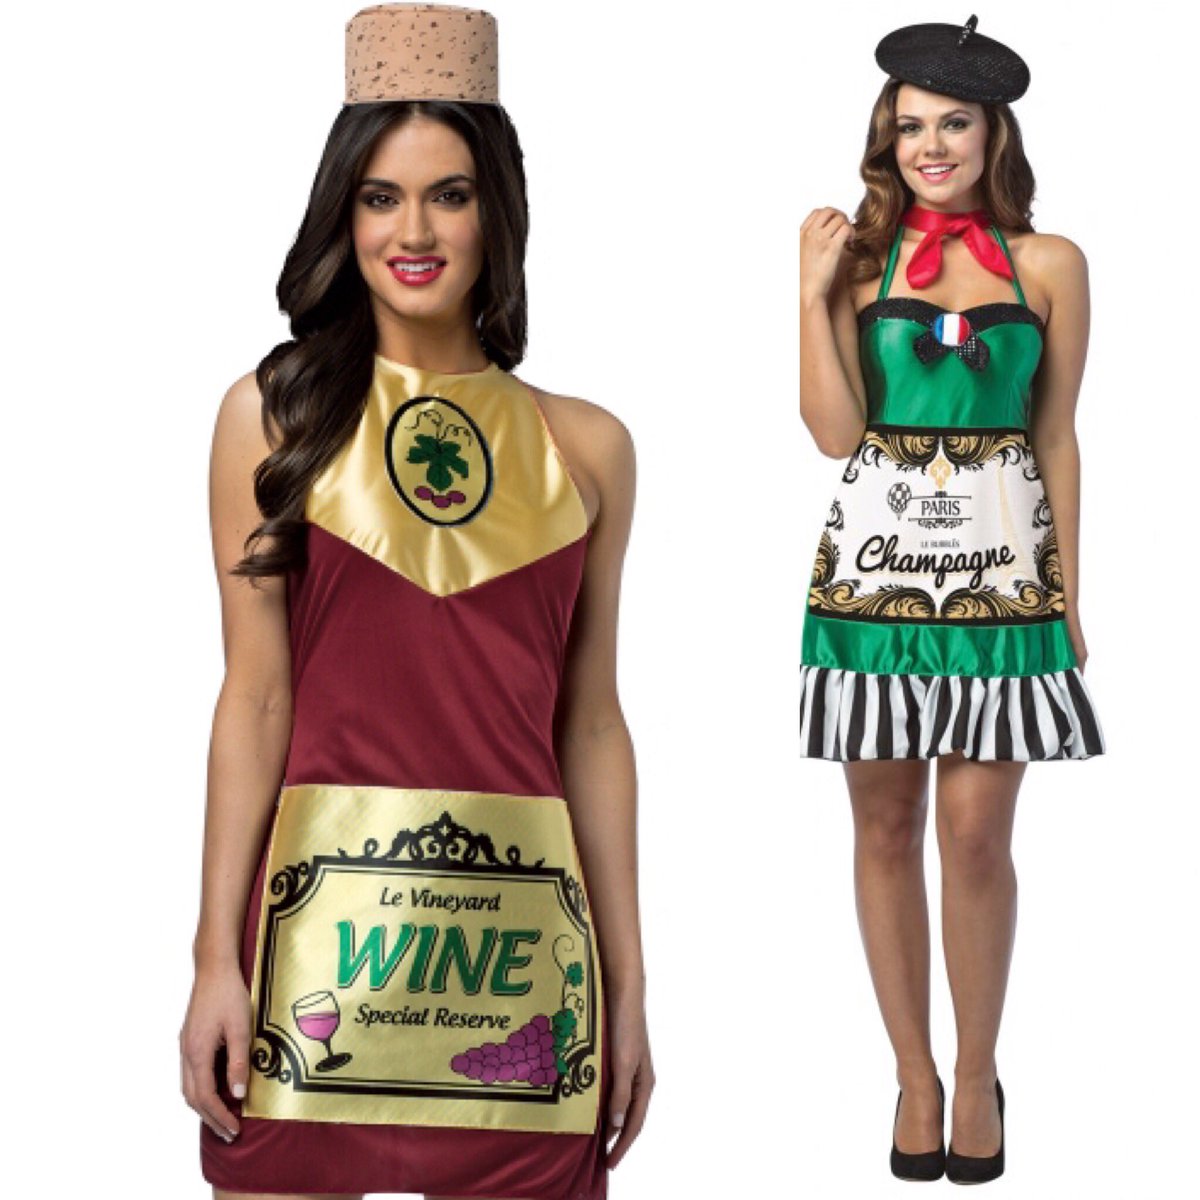 cola cristiano canal Marketing Vinícola on Twitter: "Disfraces inspirados en el vino 🍷🎉🍇 para  #winelovers que disfrutan del ¡¡#Carnaval!! 🍷🎊 https://t.co/IyeykbvZn7" /  Twitter